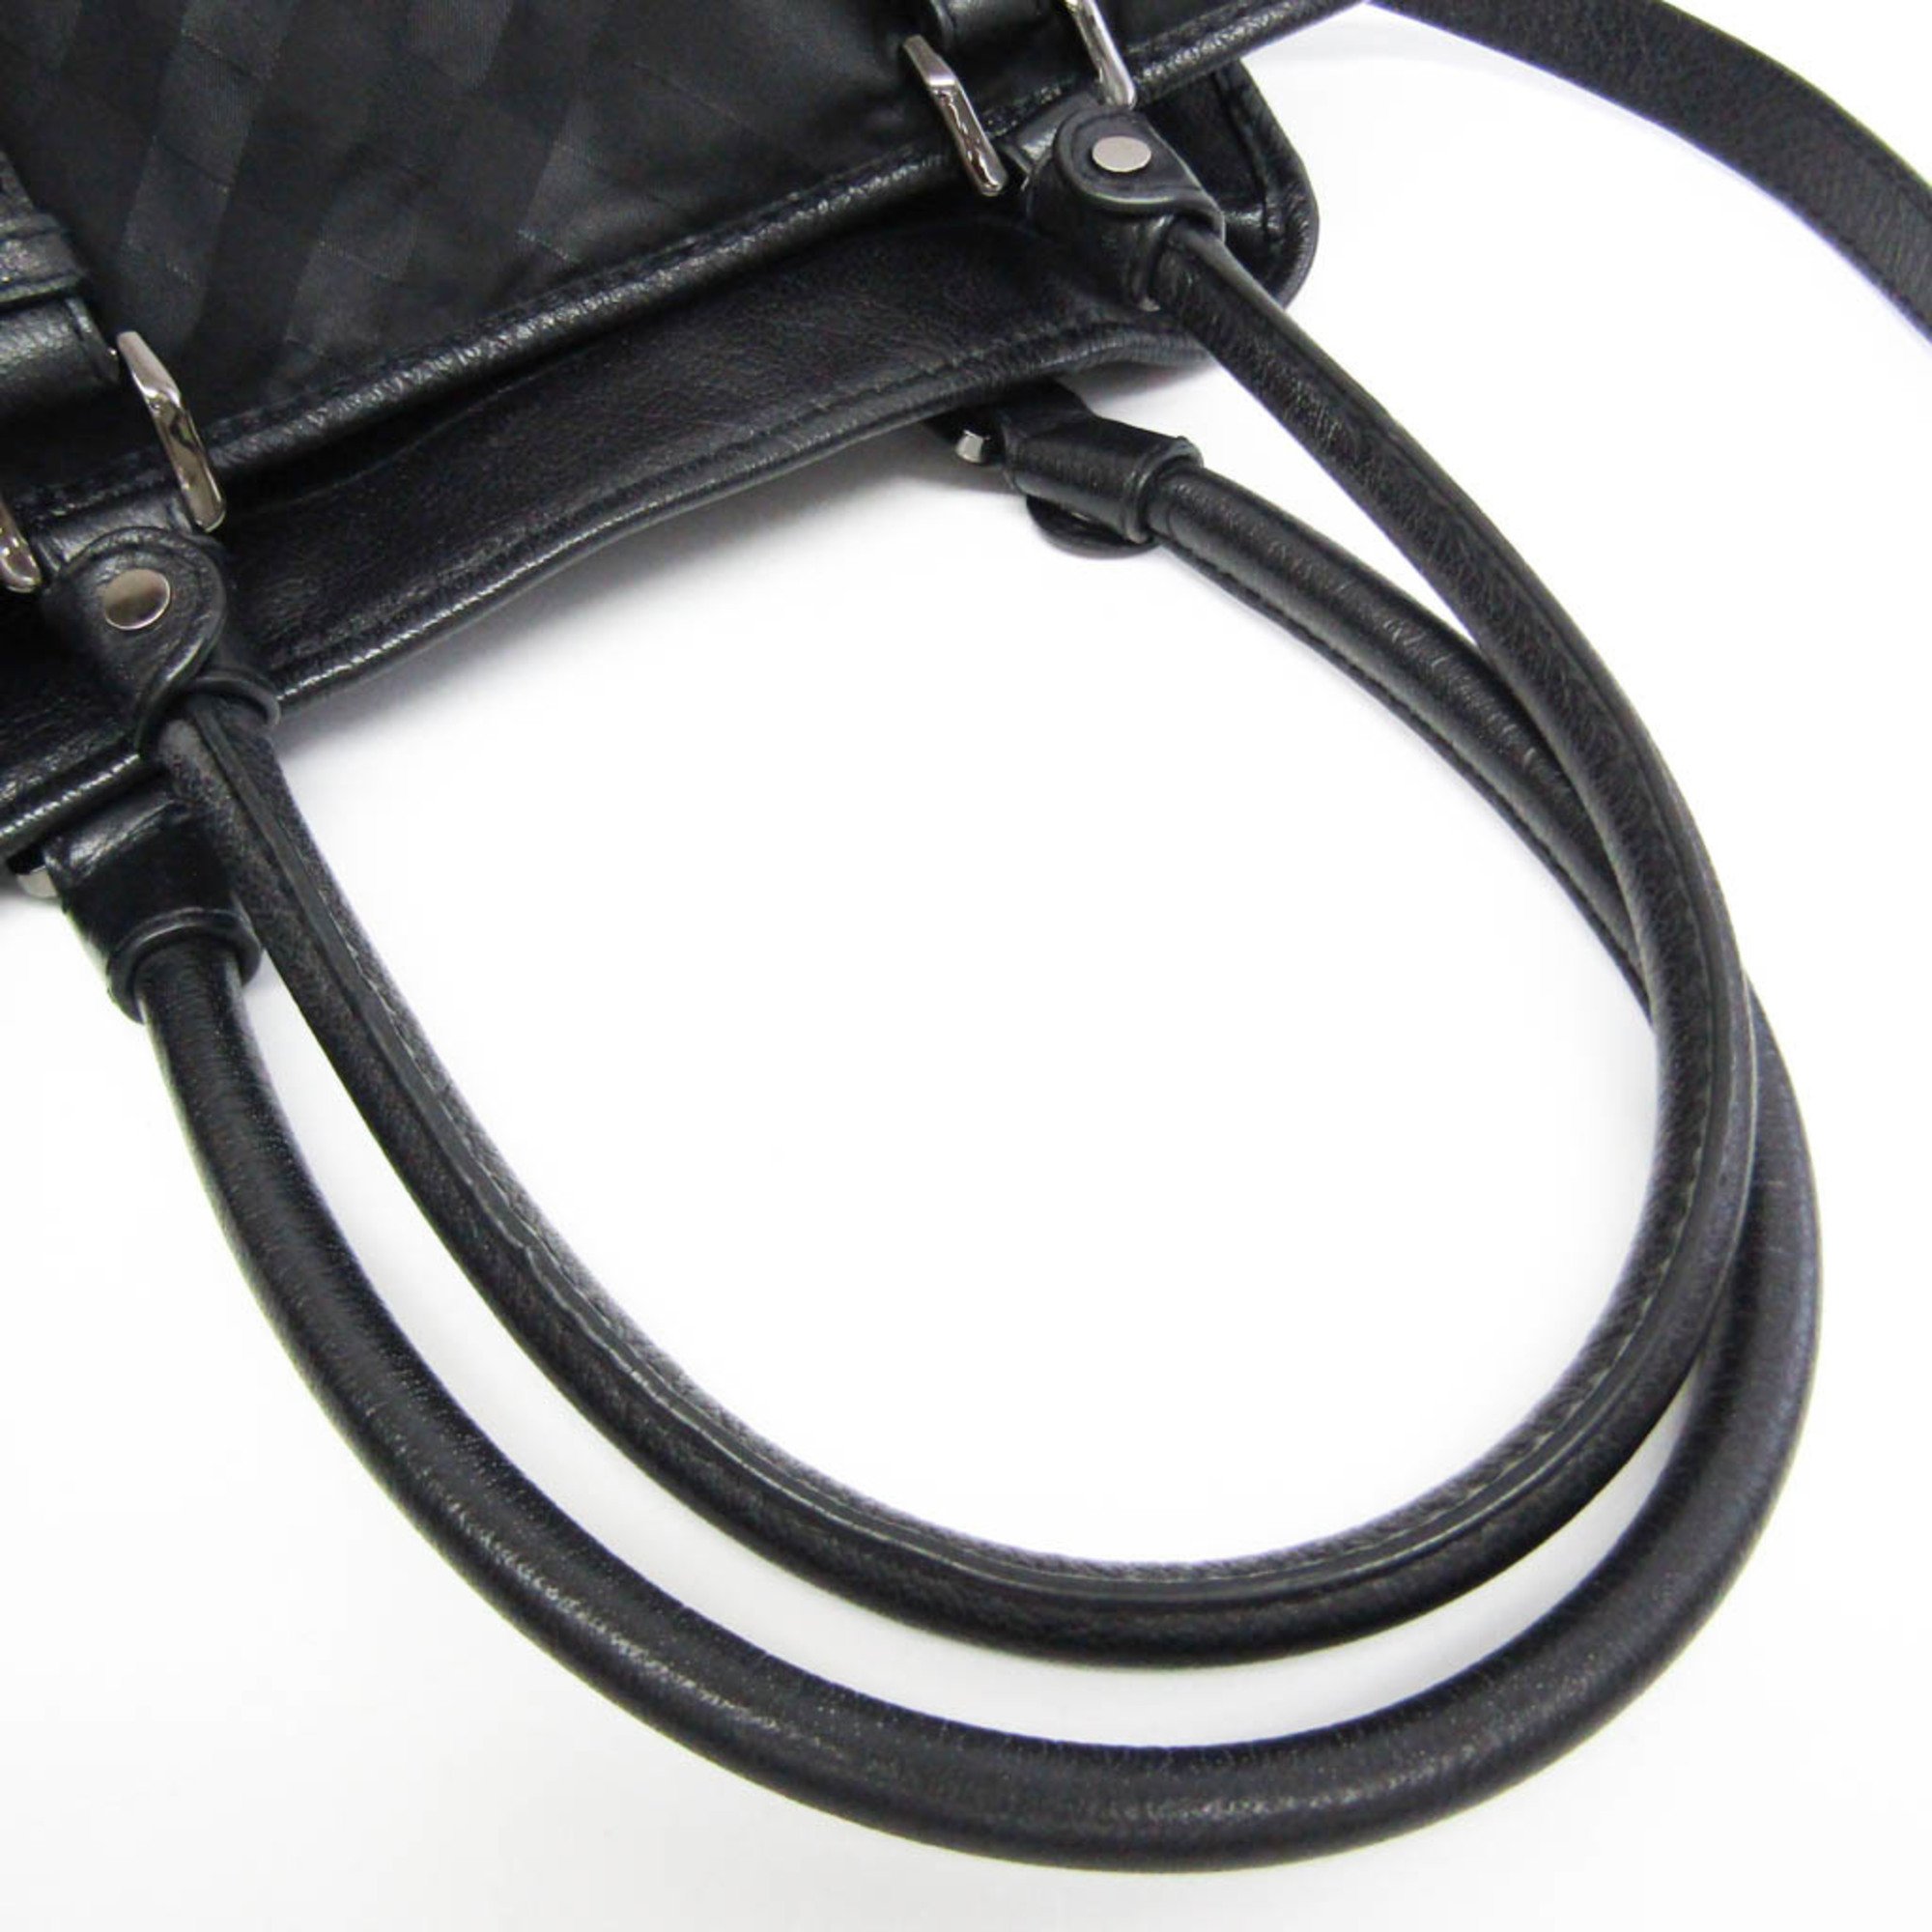 Burberry Women's Nylon,Leather Shoulder Bag Black